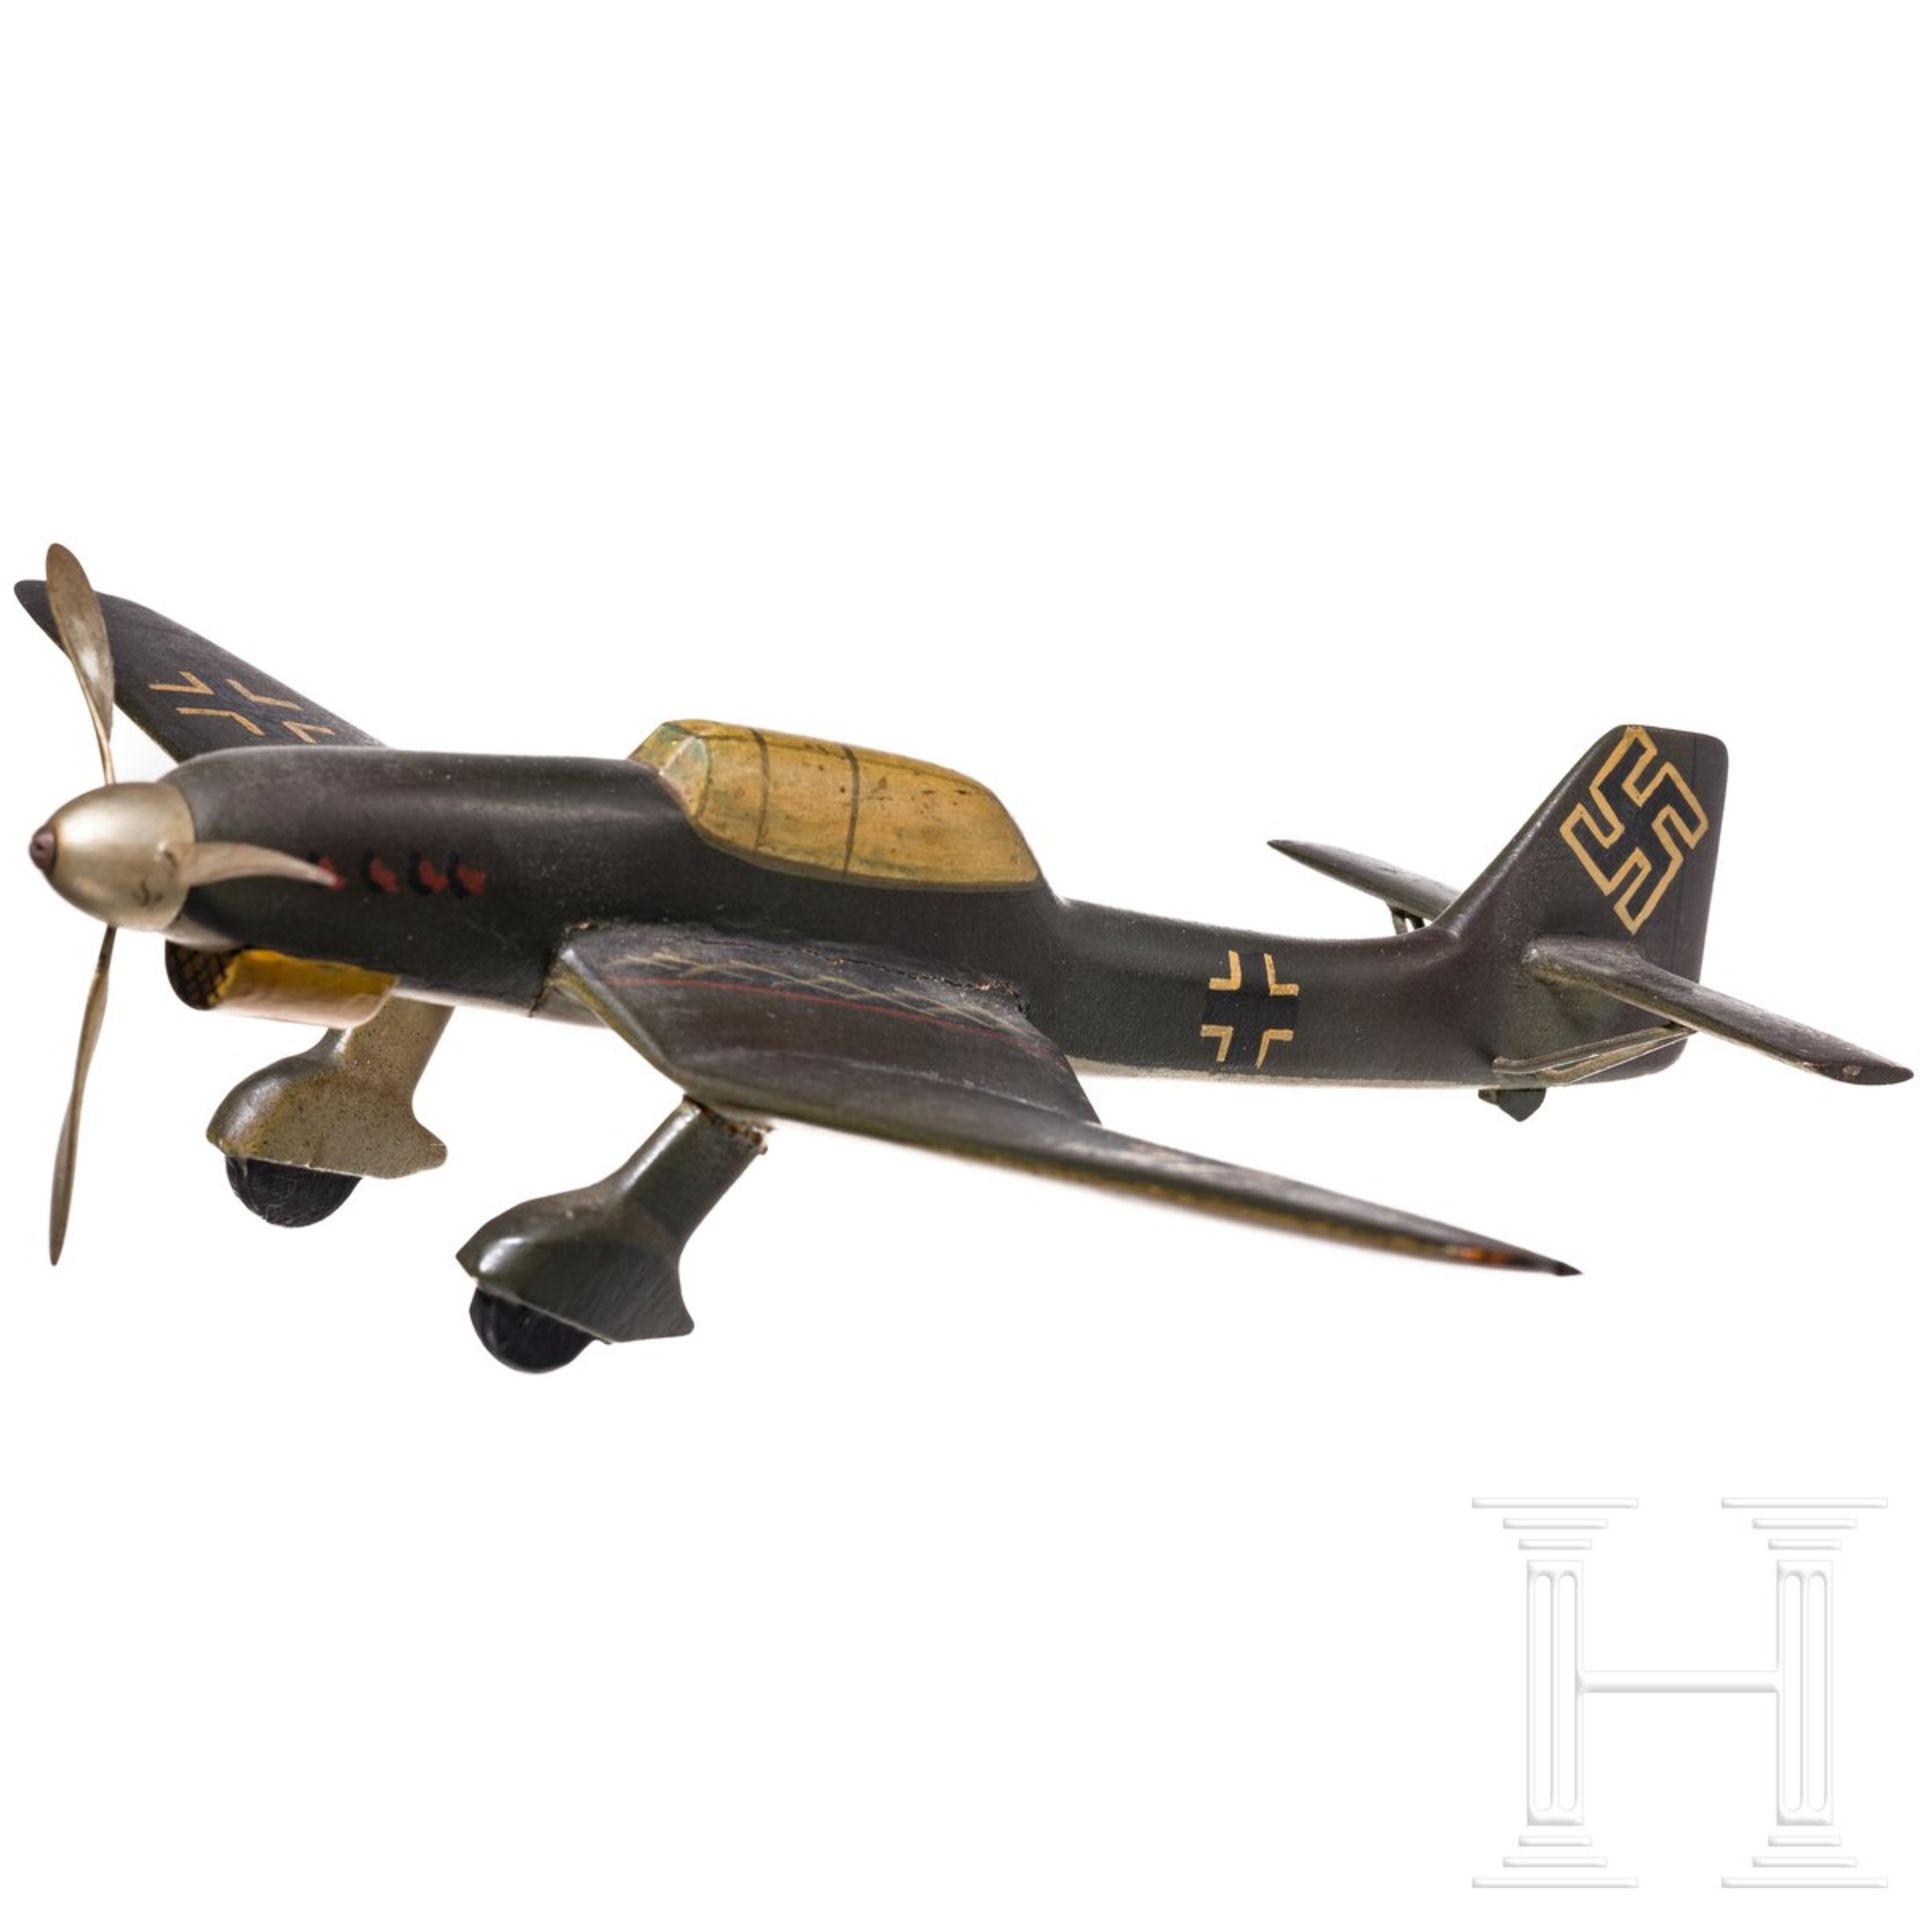 Lehrmodell einer Ju 87 "Stuka" - Image 2 of 5